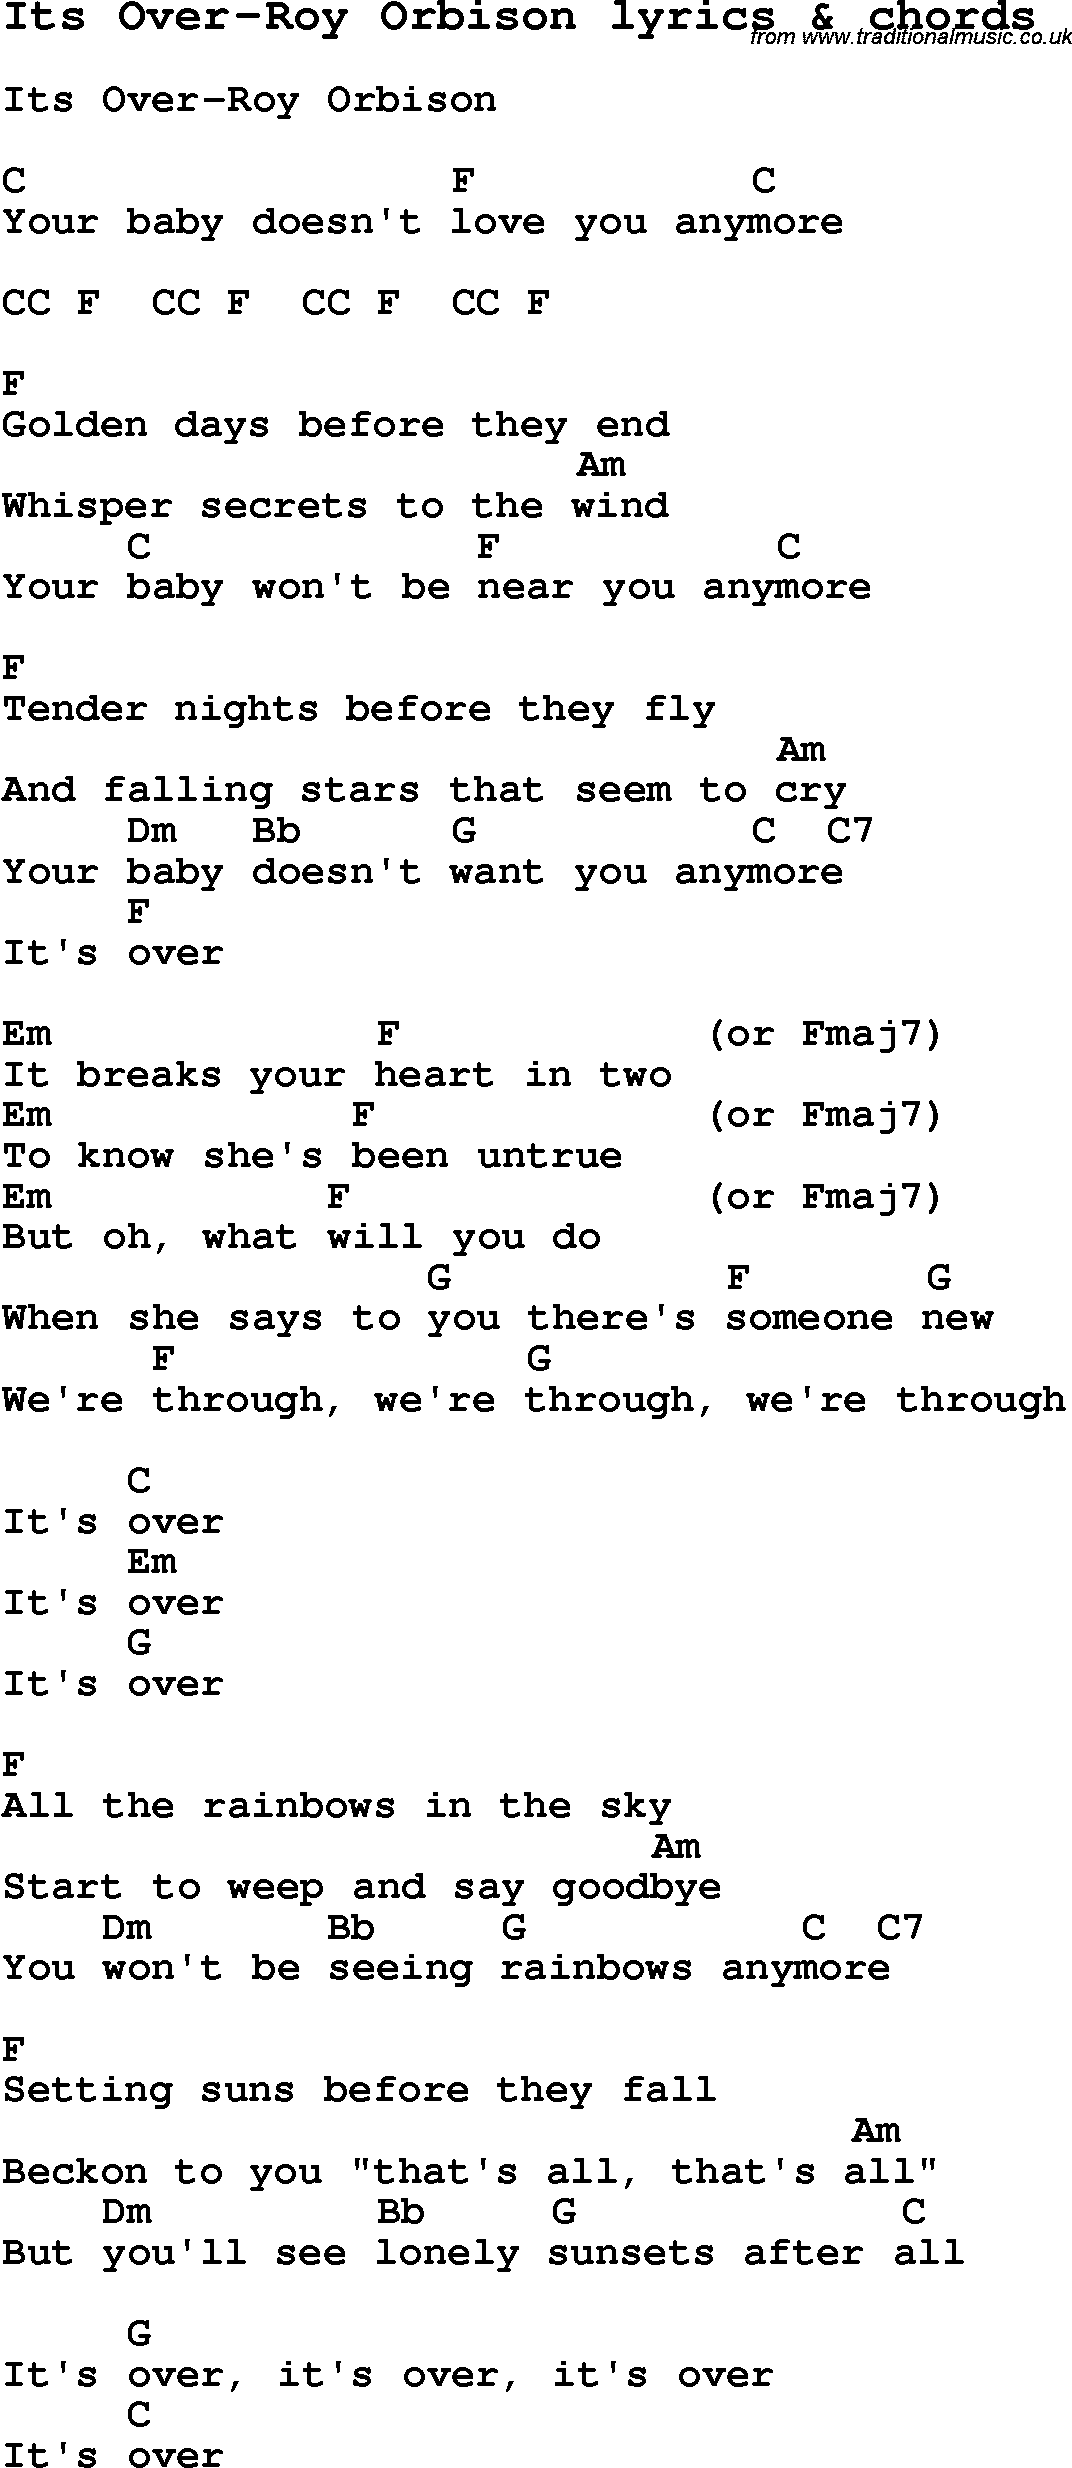 Love Song Lyrics for: Its Over-Roy Orbison with chords for Ukulele, Guitar Banjo etc.